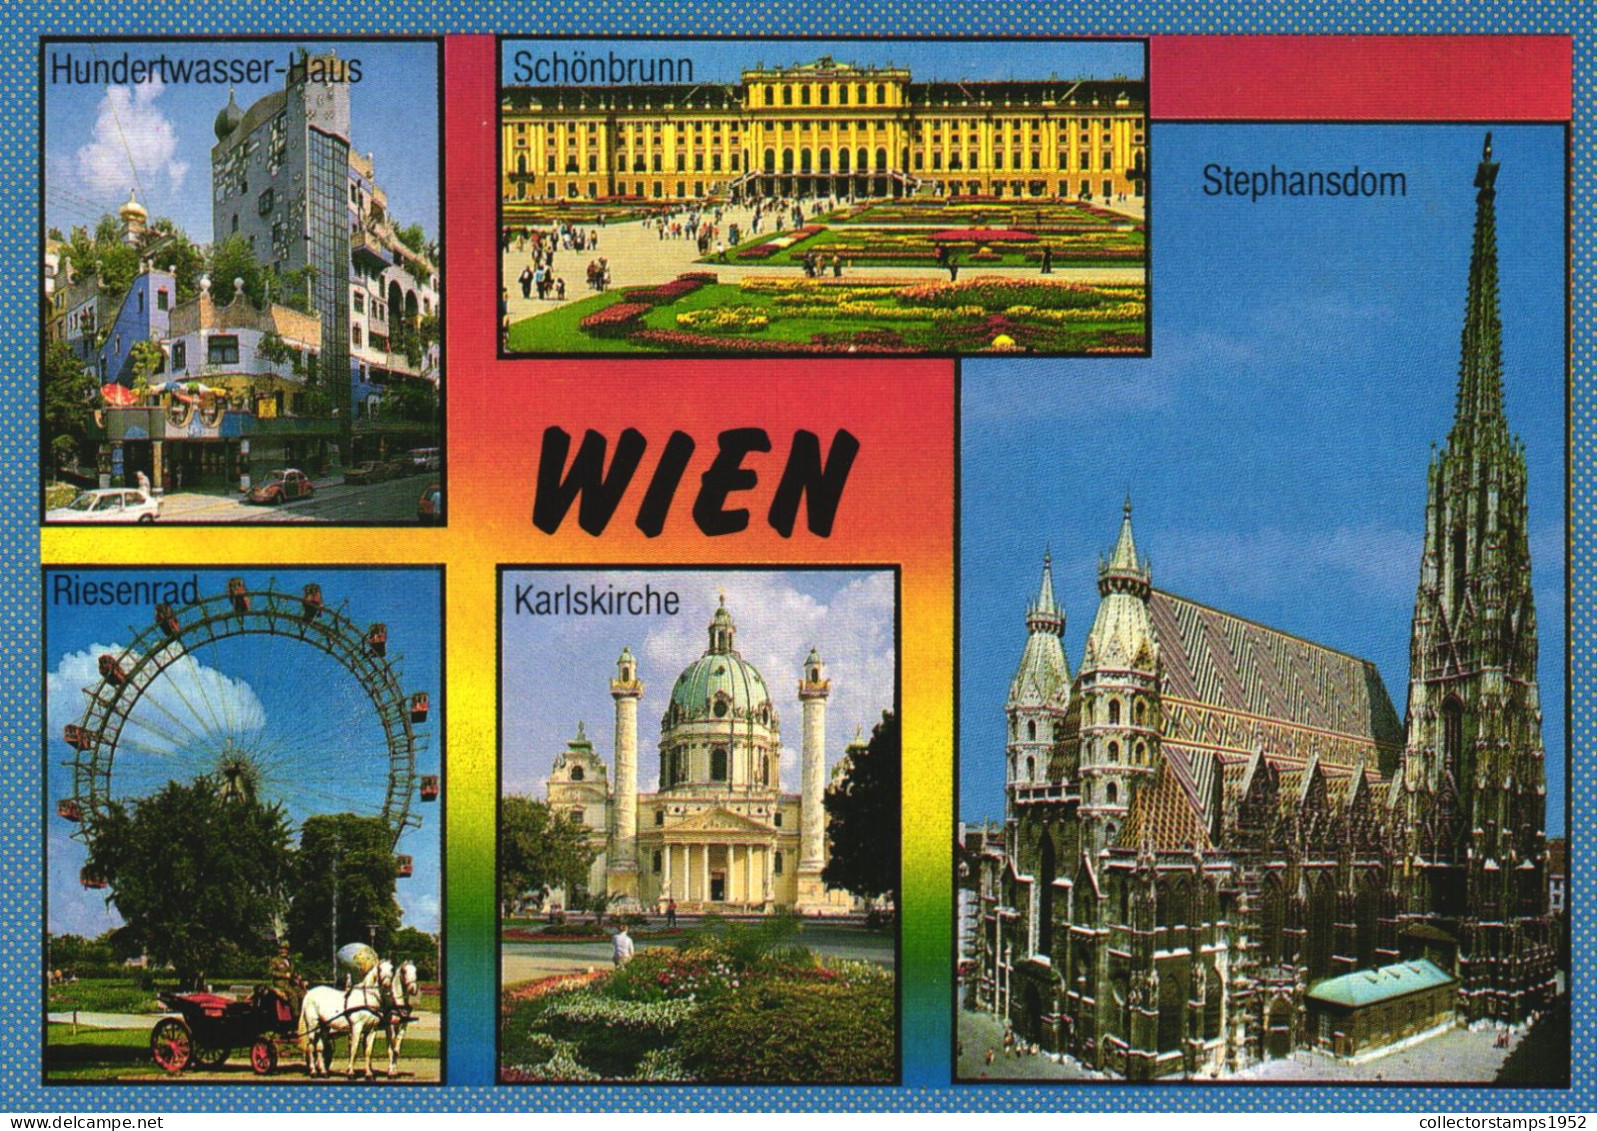 VIENNA, MULTIPLE VIEWS, ARCHITECTURE, GIANT WHEEL, PARK, PALACE, CHURCH, CARS, CARRIAGE, HORSES, AUSTRIA, POSTCARD - Vienna Center